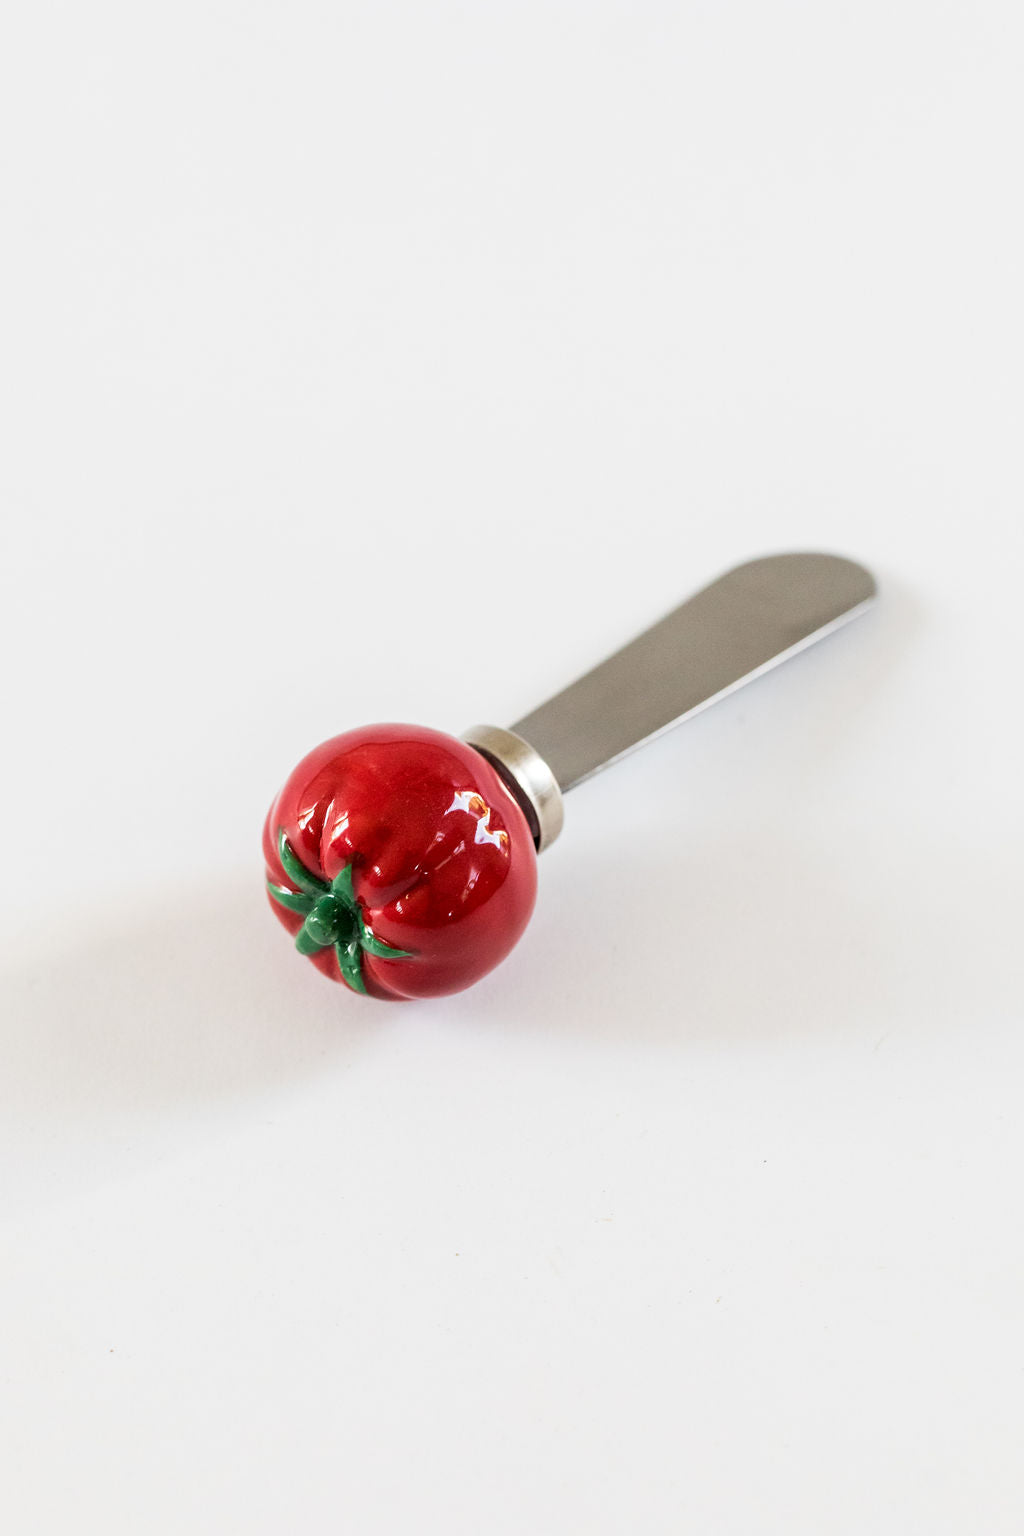 Tomato Spreader